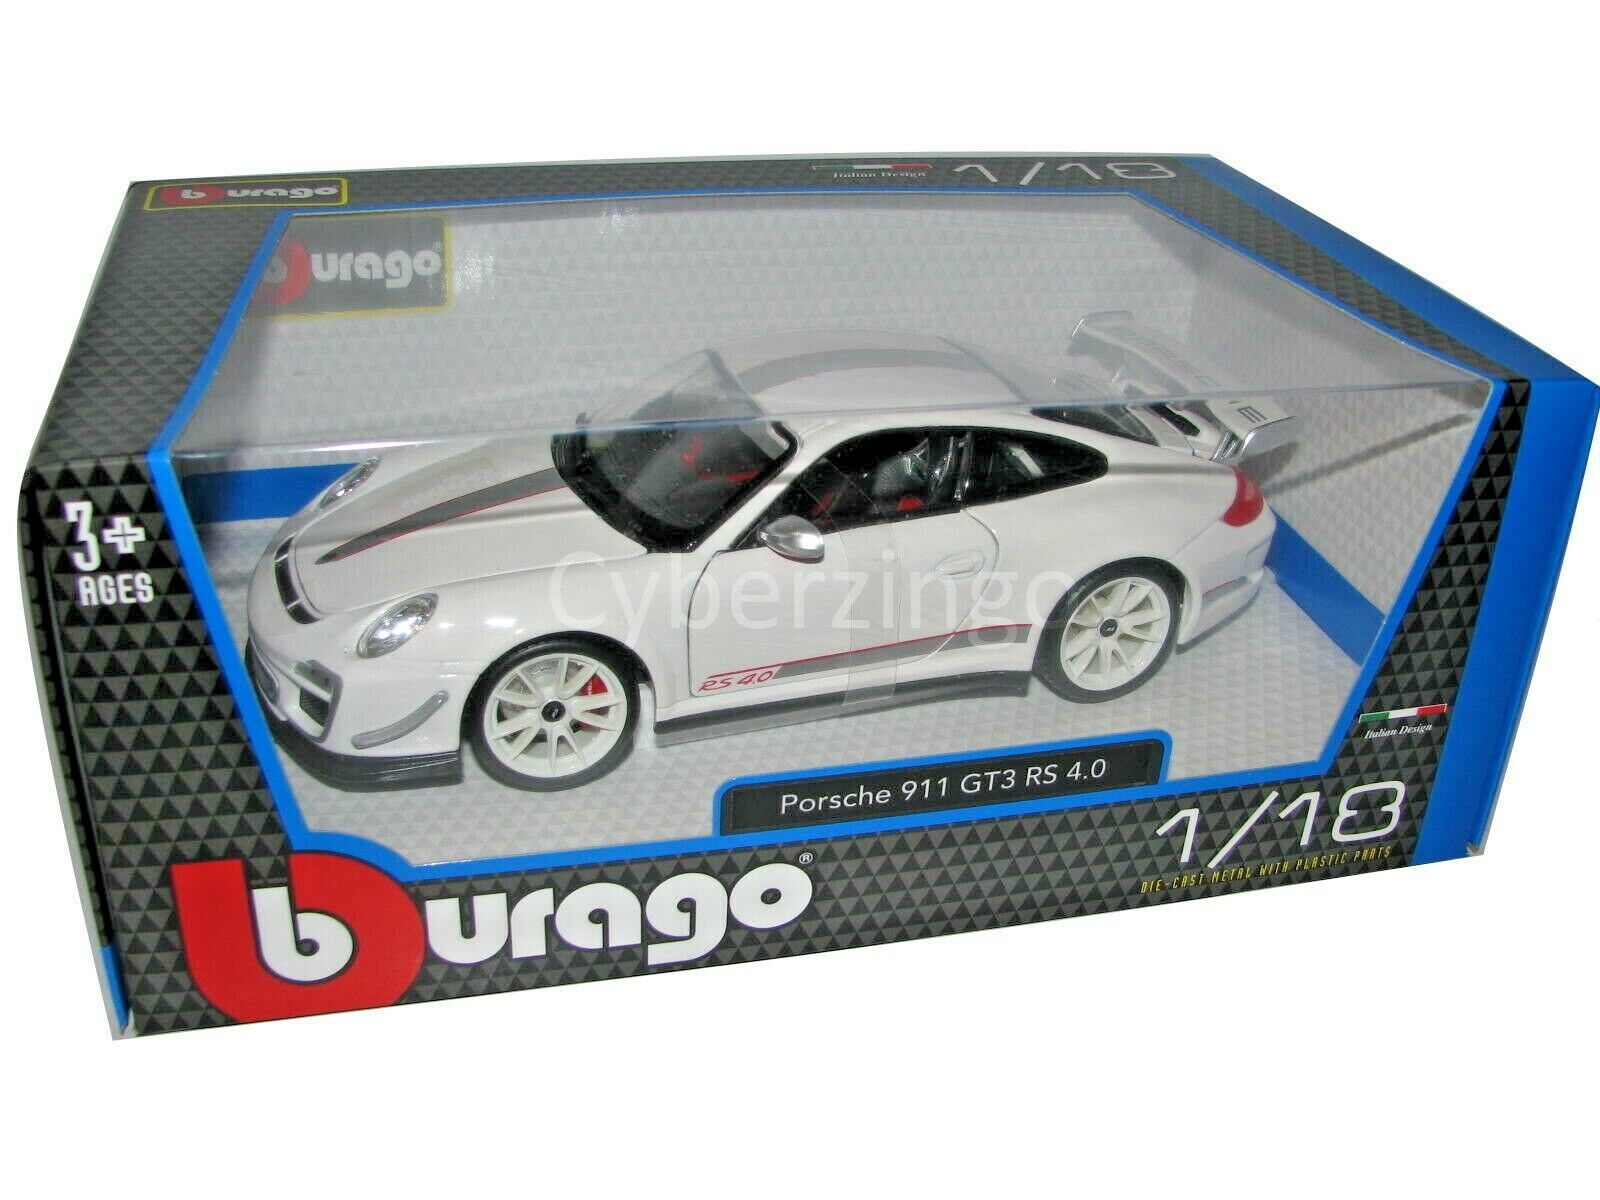 Bburago 1:18 Scale Porsche 911 GT3 RS 4.0 White Diecast Car 18-11036 BRAND NEW - $49.99